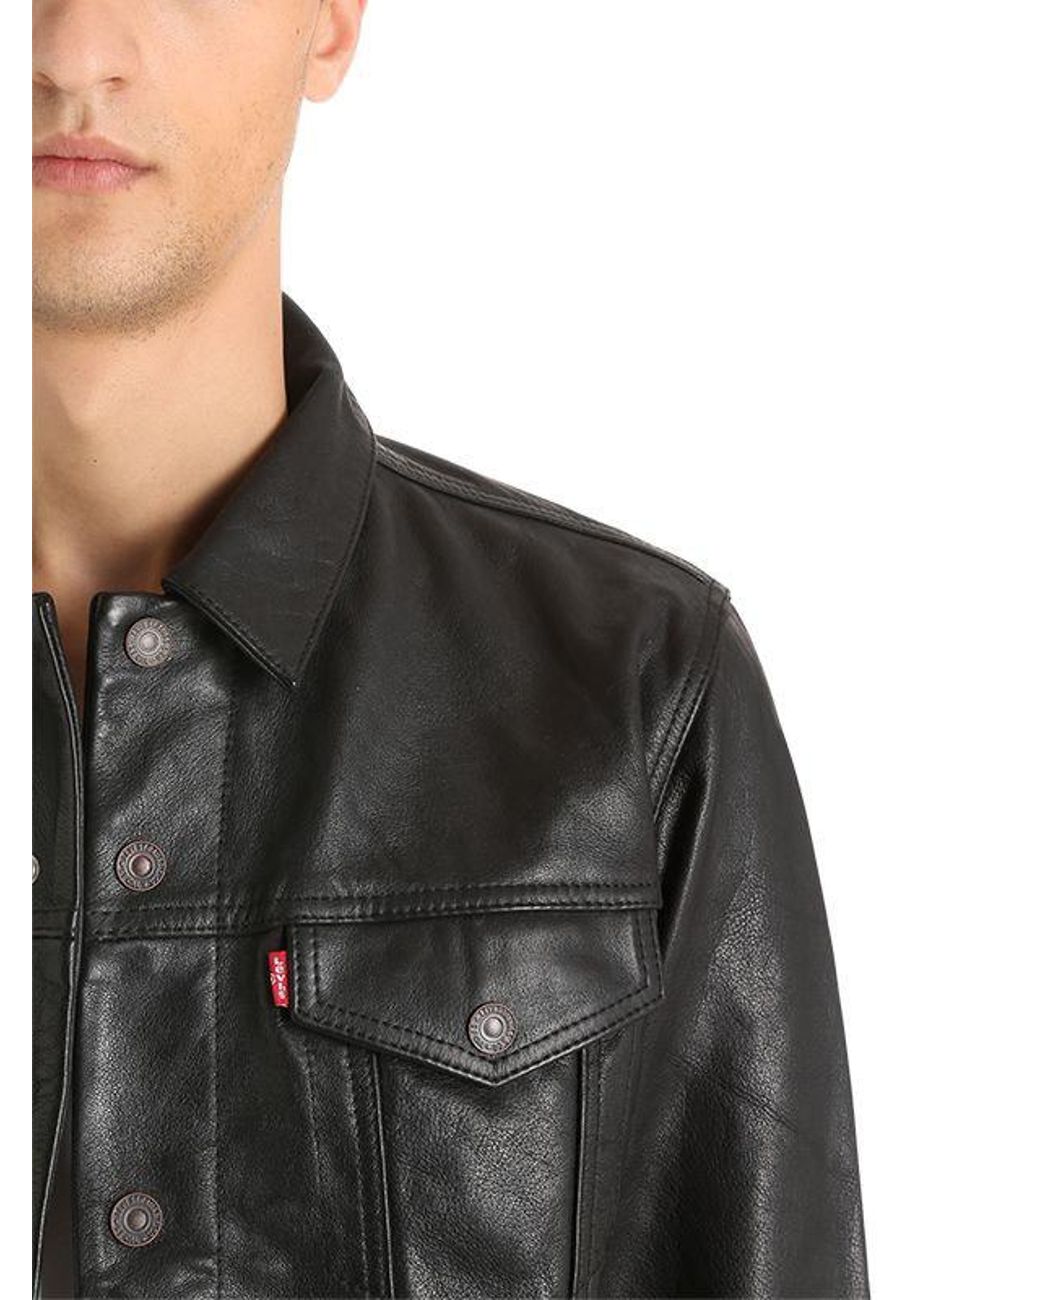 Descubrir 47+ imagen levi's men's leather trucker jacket - Thptnganamst ...